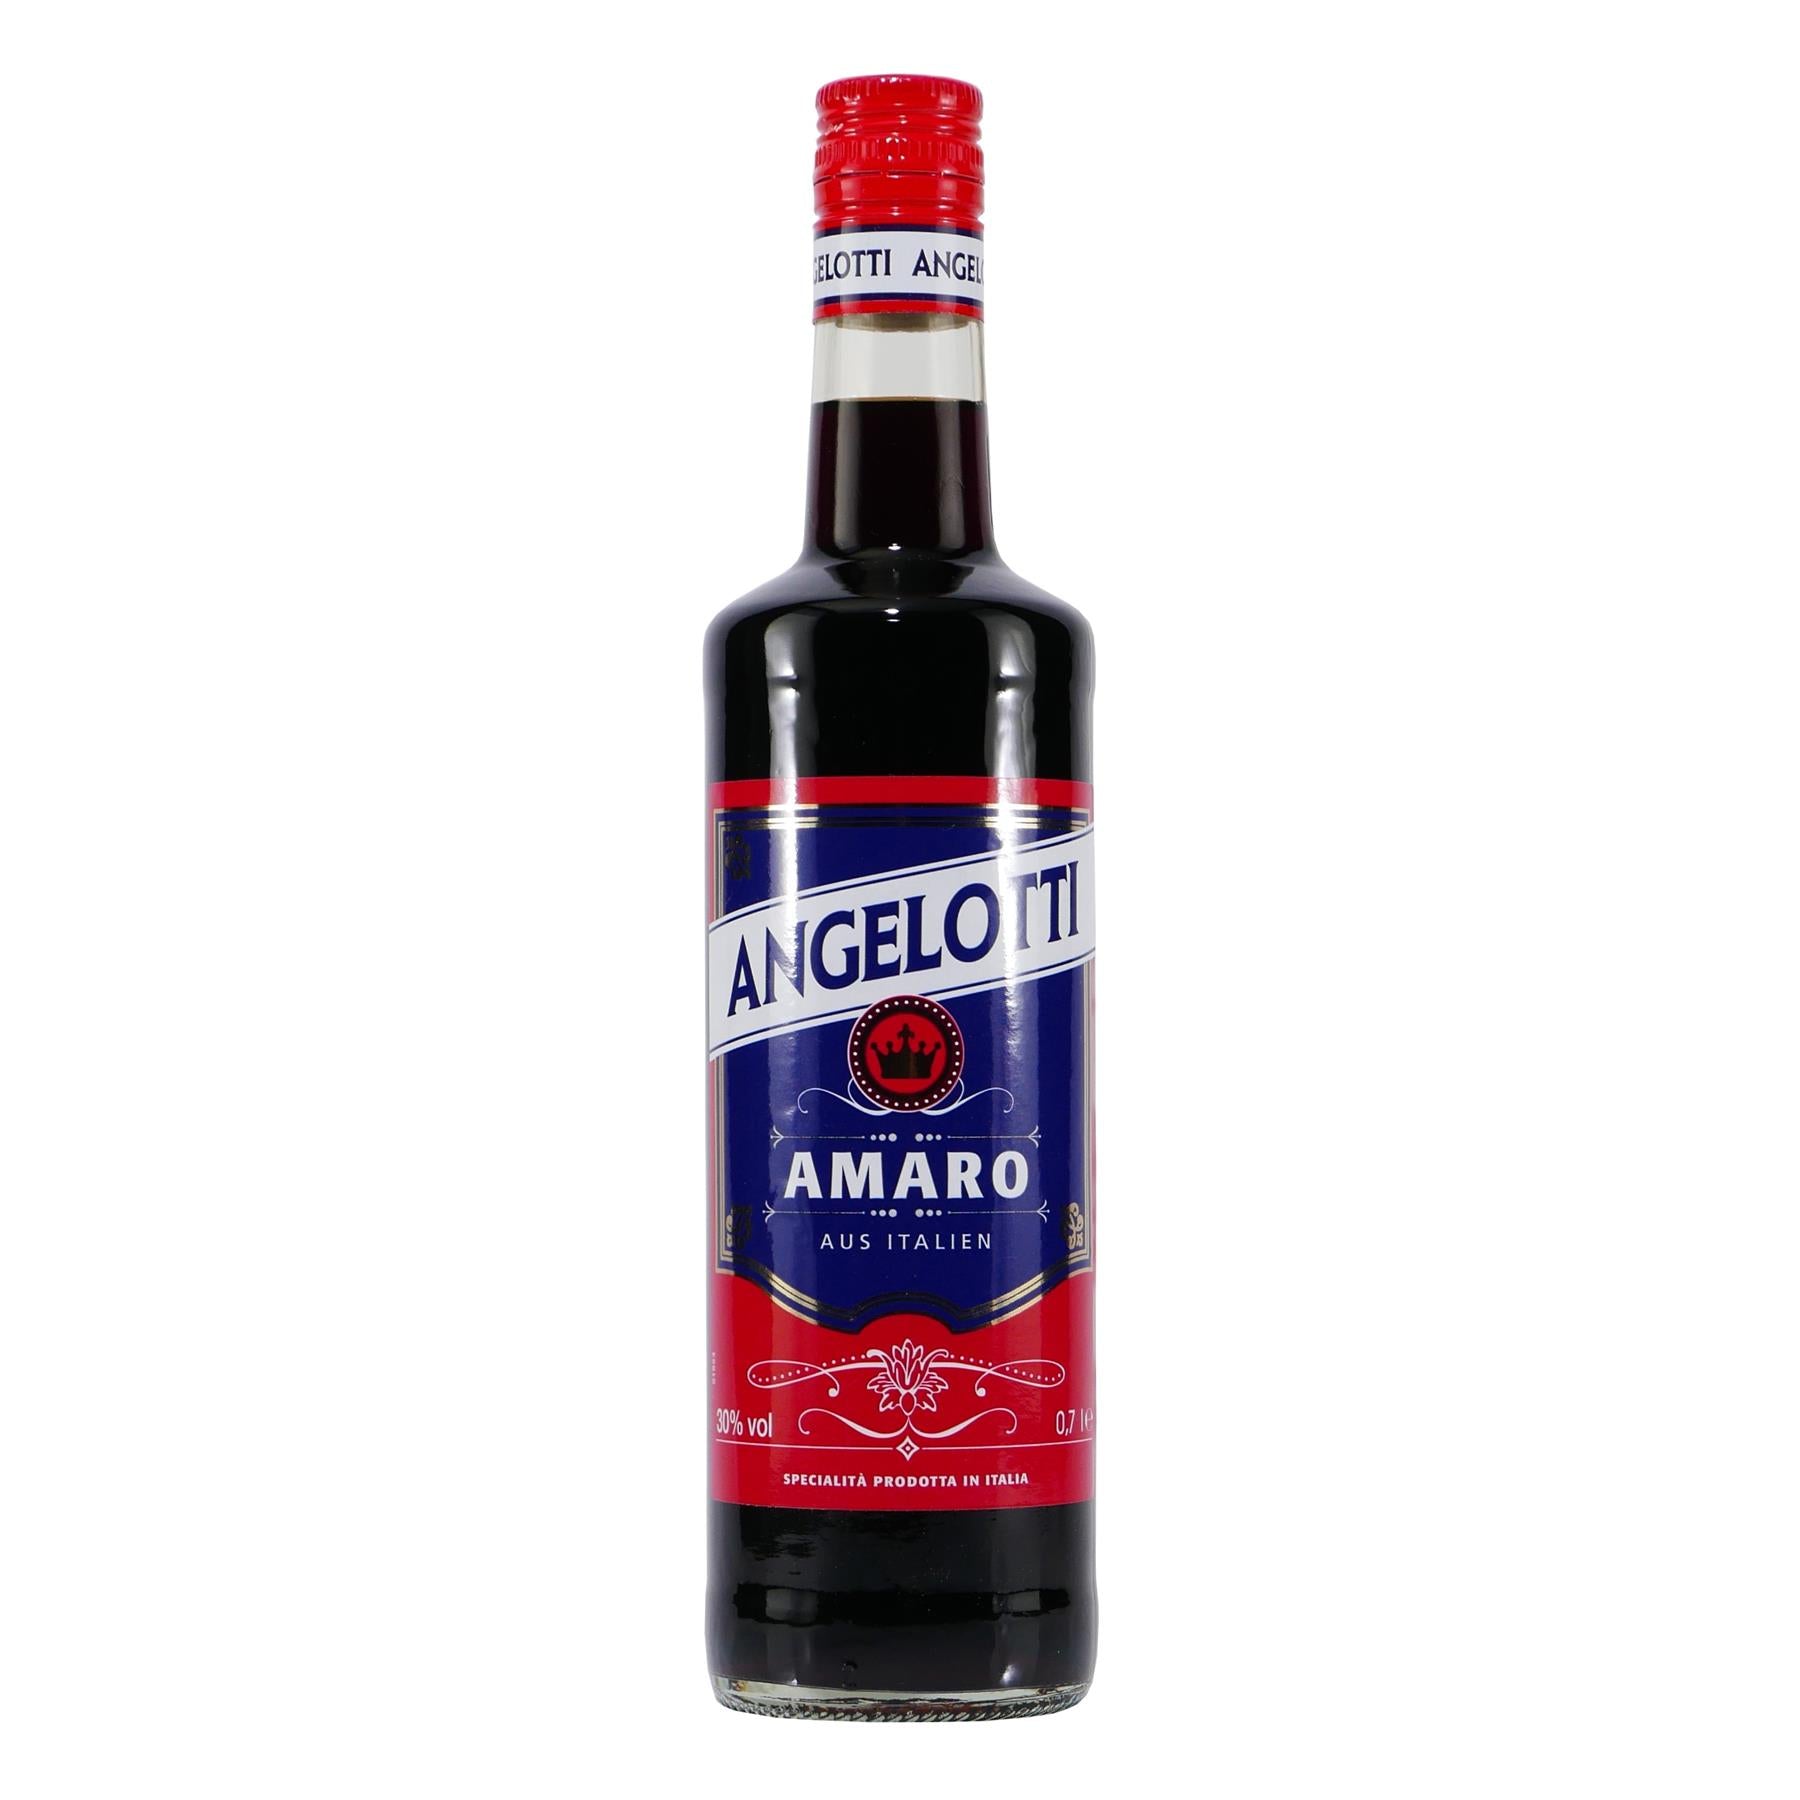 Angelotti Amaro Kräuter-Likör (6 x 0,7L)